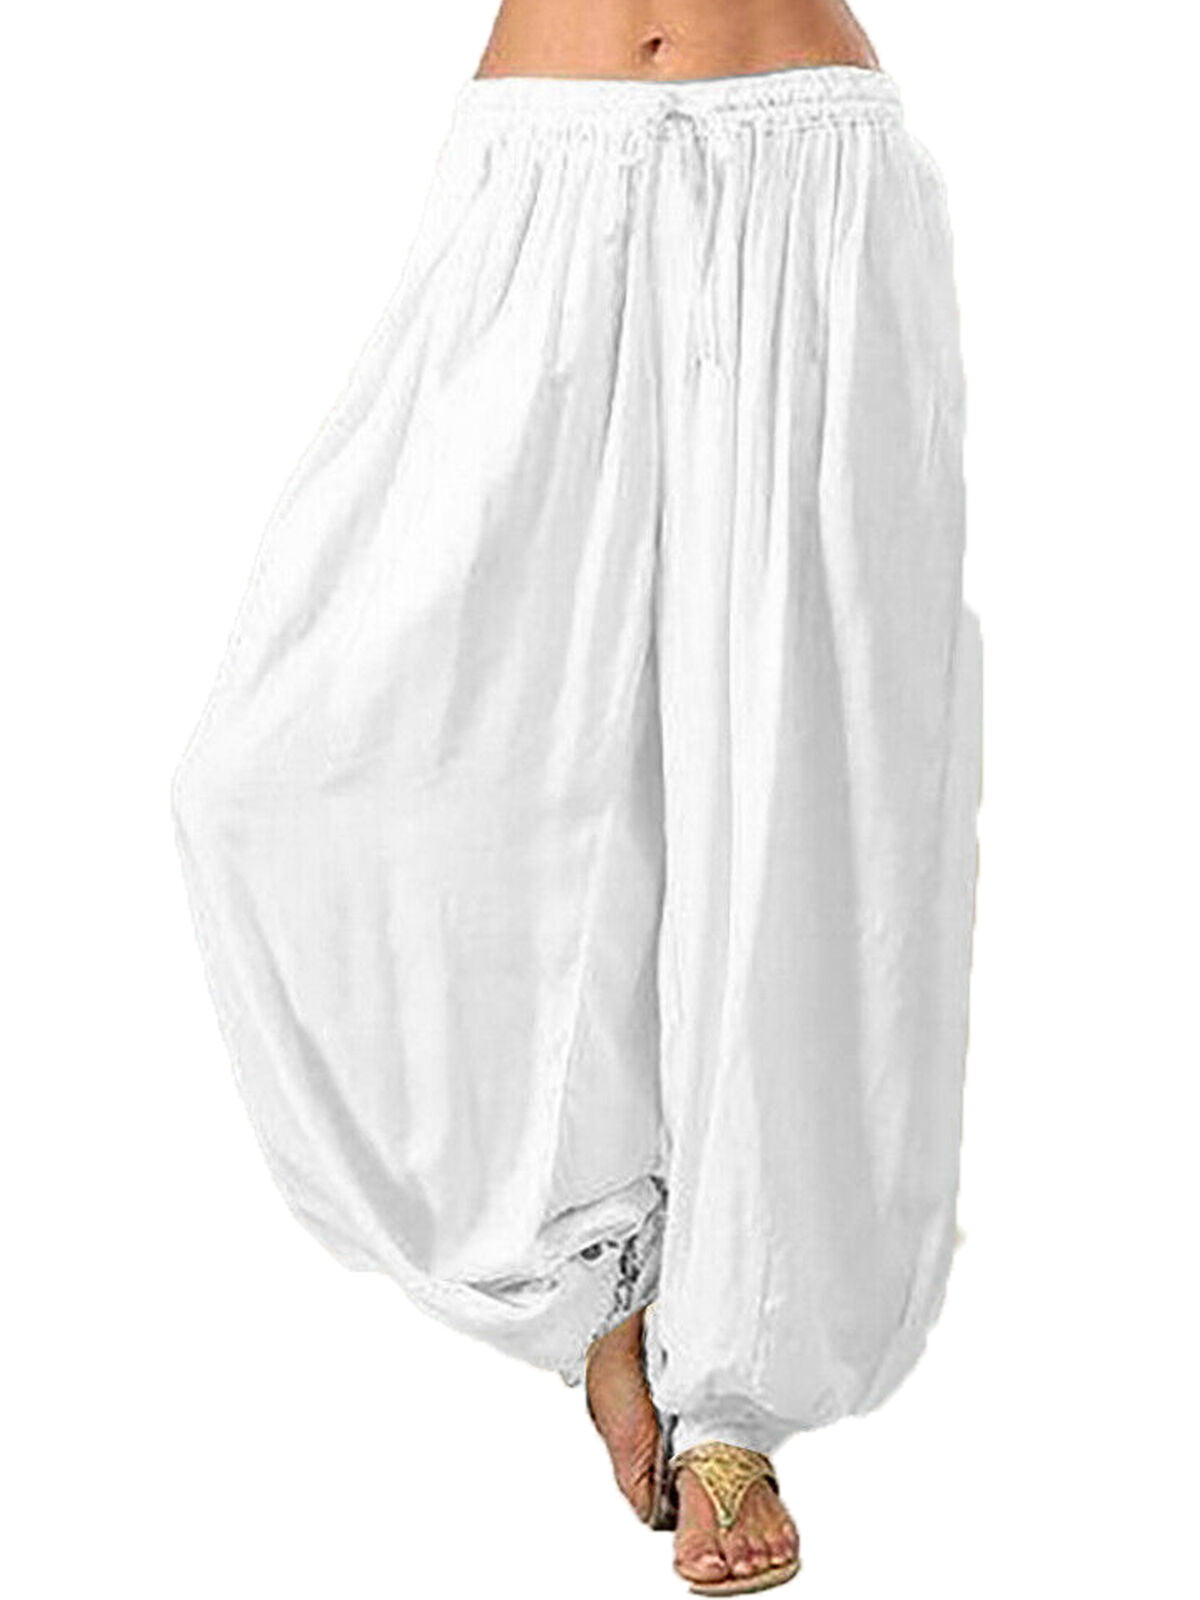 Indian Ali Baba Harem Gypsy Hippie Baggy Plain Pants Women Trousers Boho Yoga